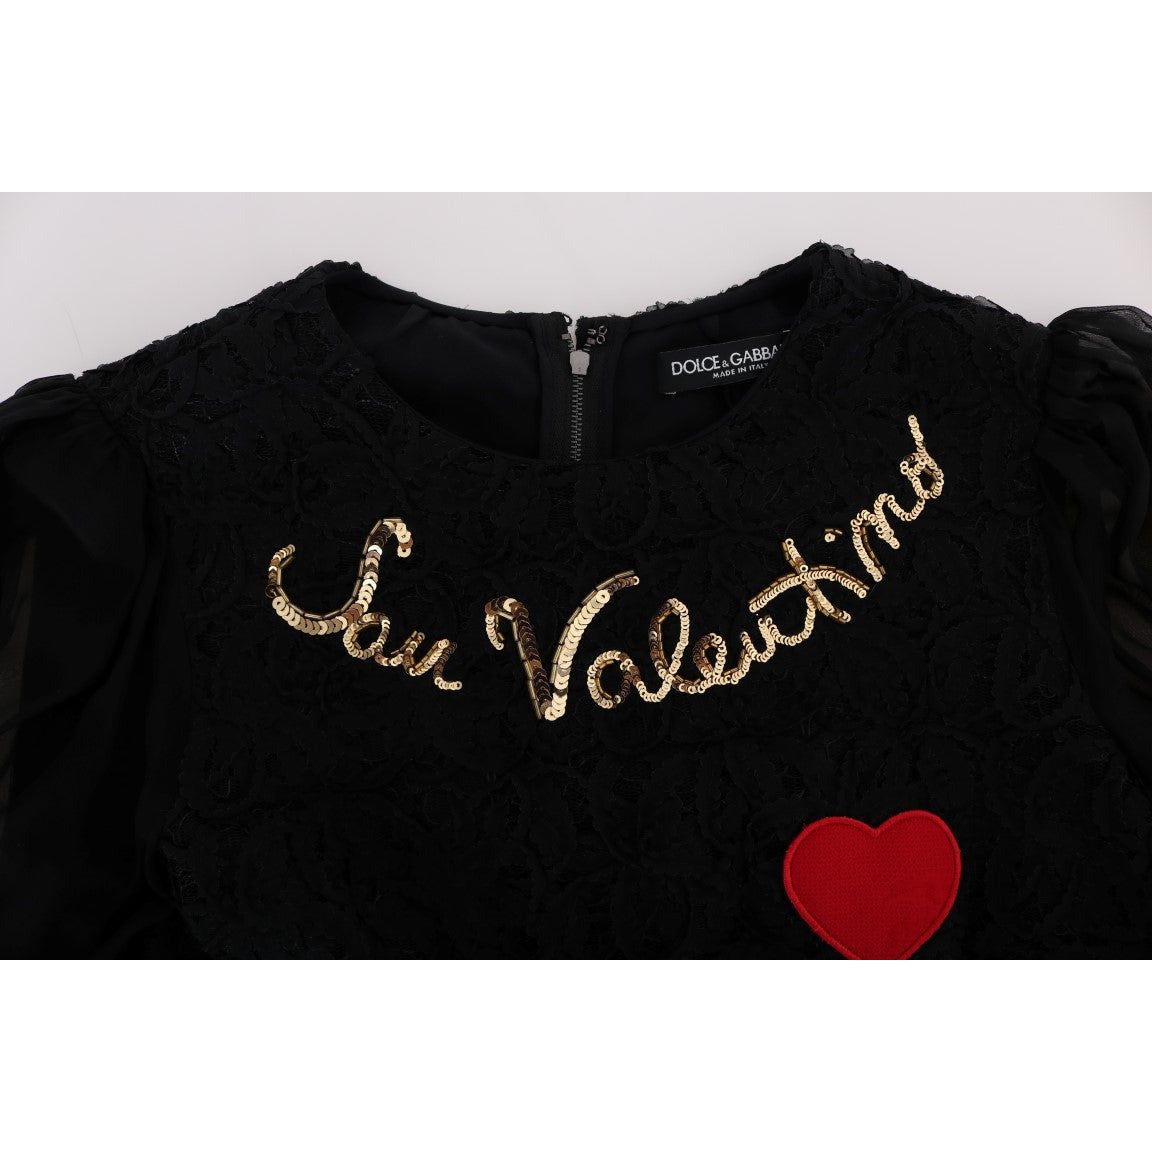 Dolce & Gabbana Black Lace Sequined Shift Dress black-san-valentino-sequined-shift-dress 450883-black-san-valentino-sequined-shift-dress-6_2edb88e0-050f-4309-8f73-88a0d66f9449.jpg